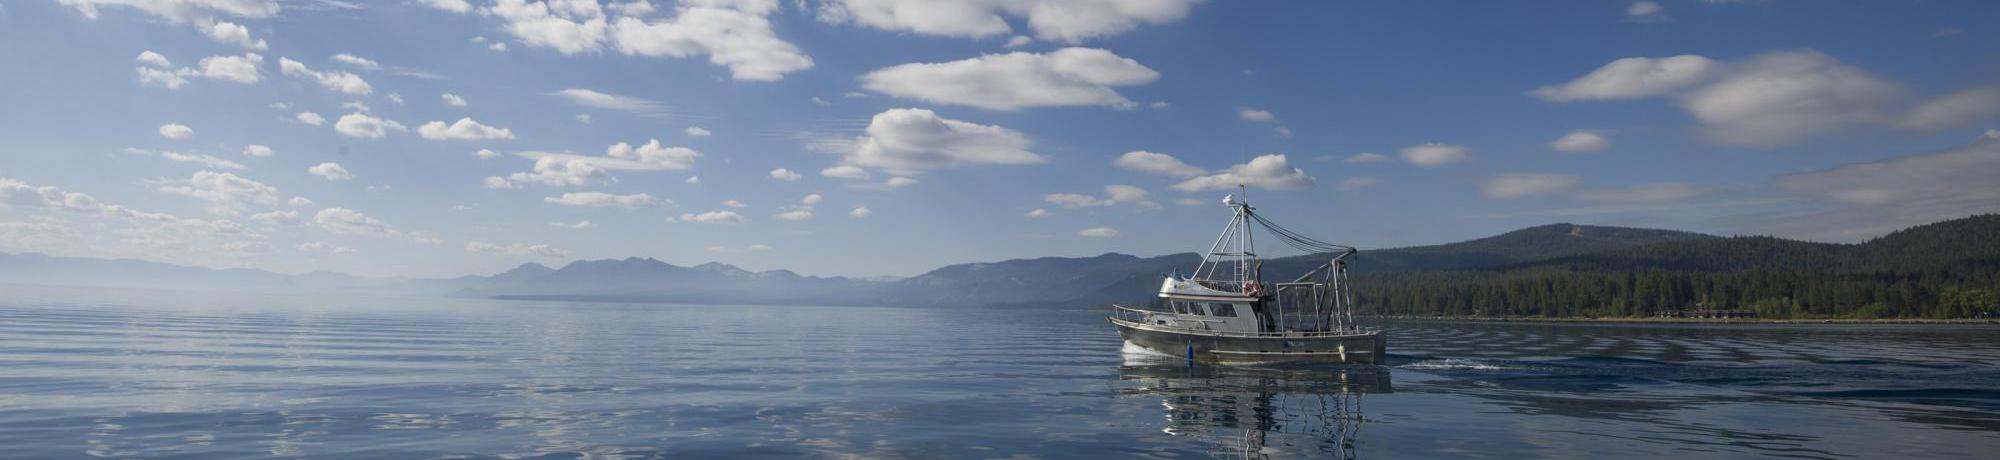 research vessel on Lake Tahoe